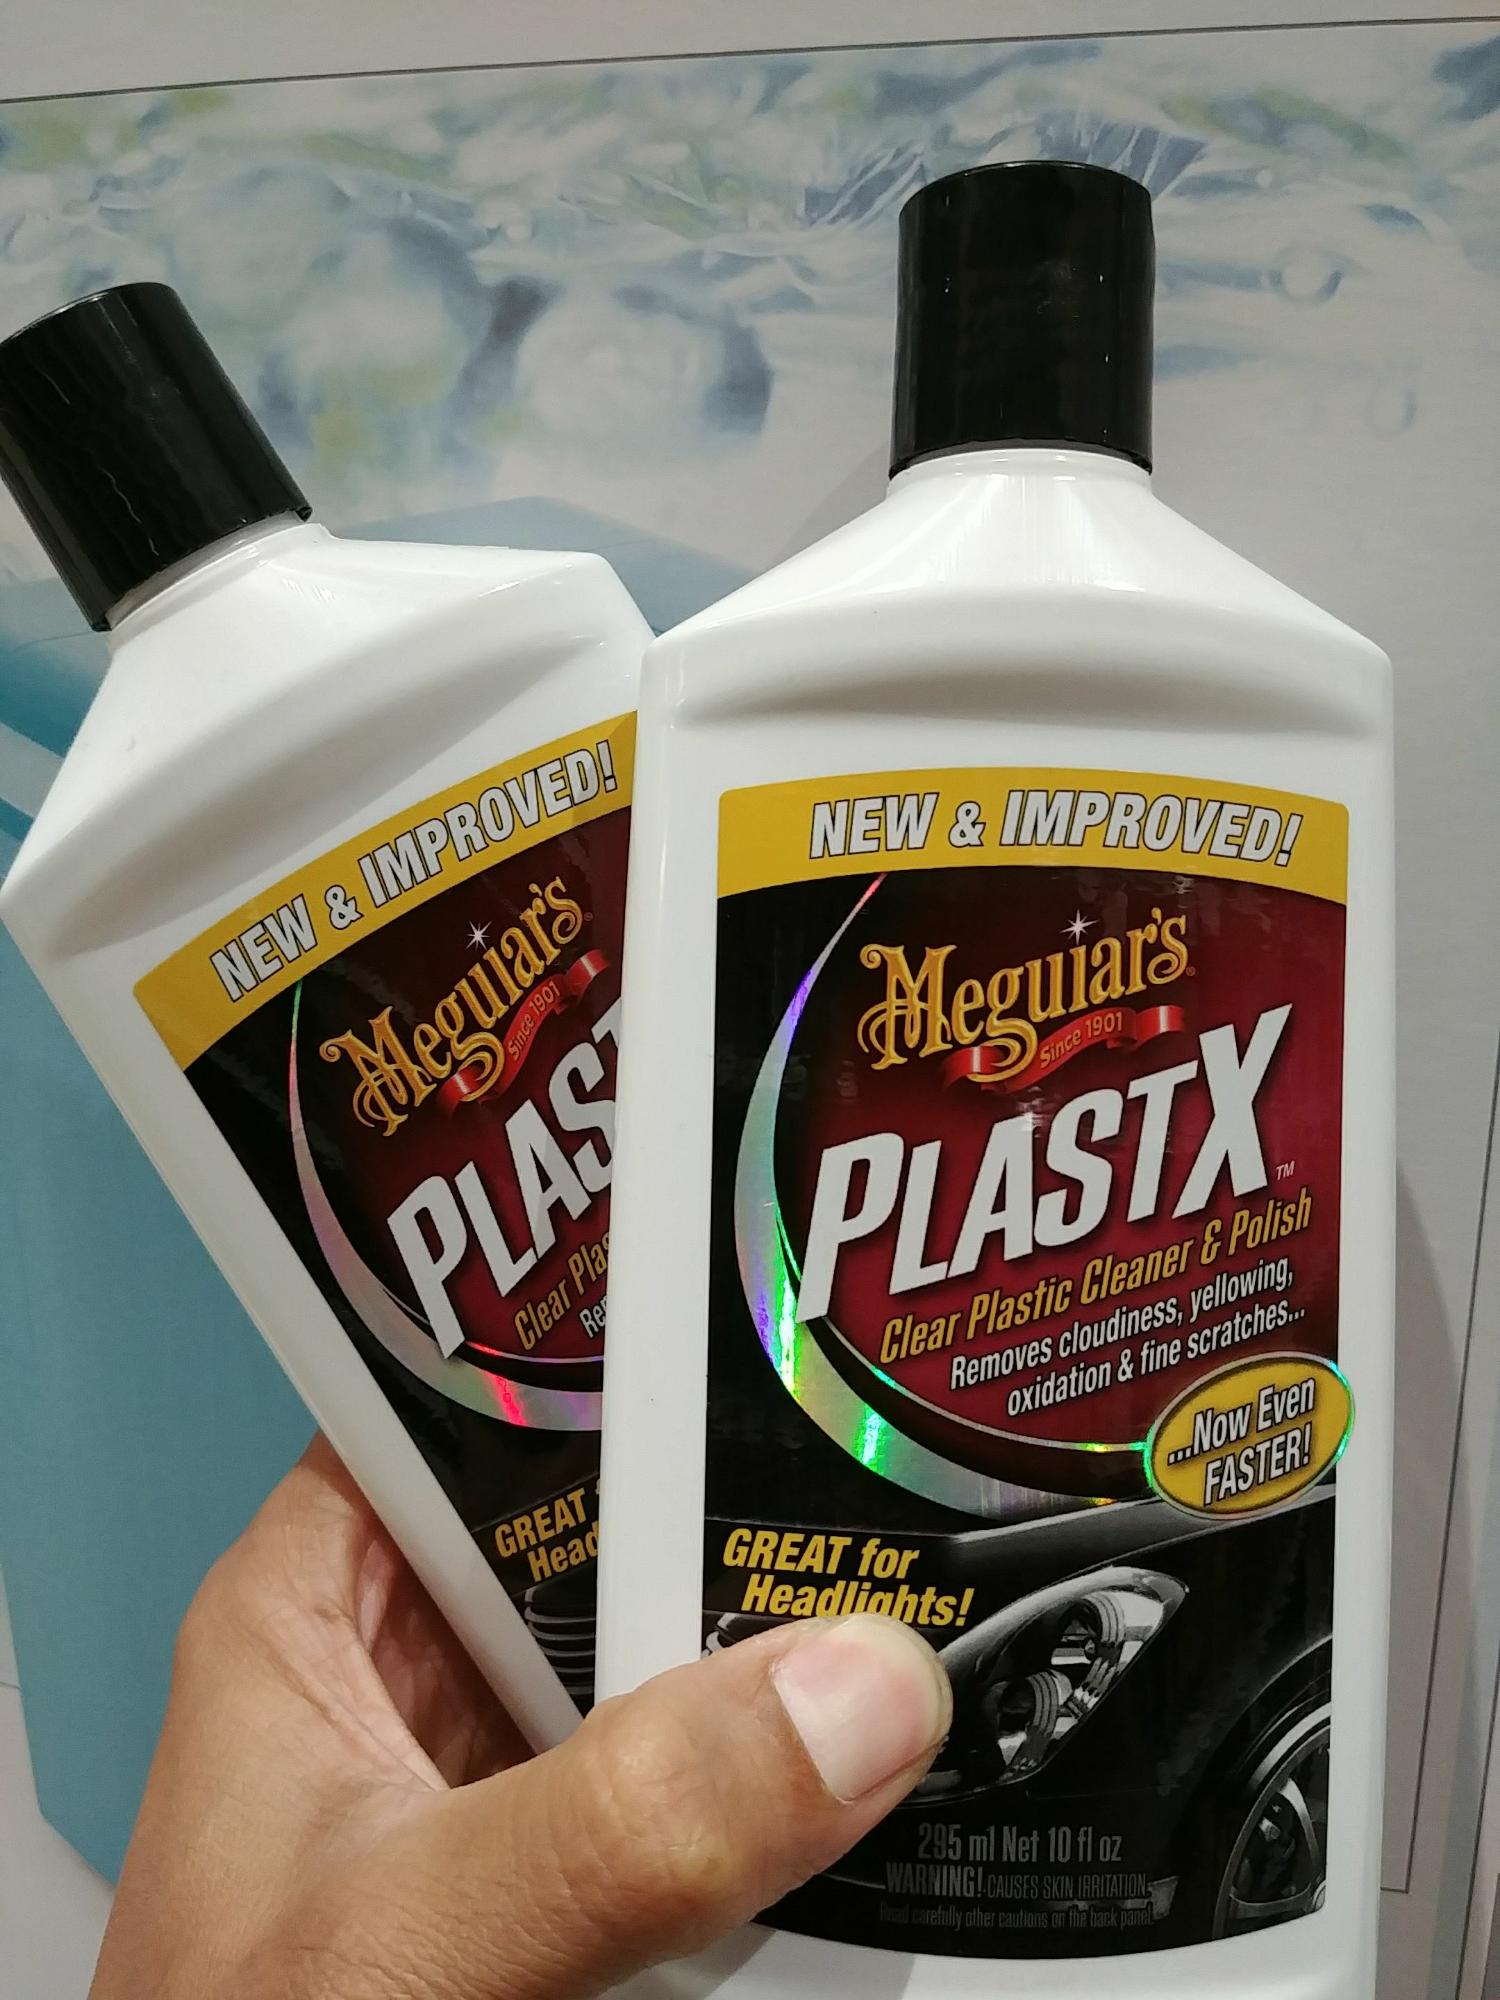 Jual meguiars plastx clear plastic cleaner & polish - 60ml - Kota Bandung -  Lightmedia